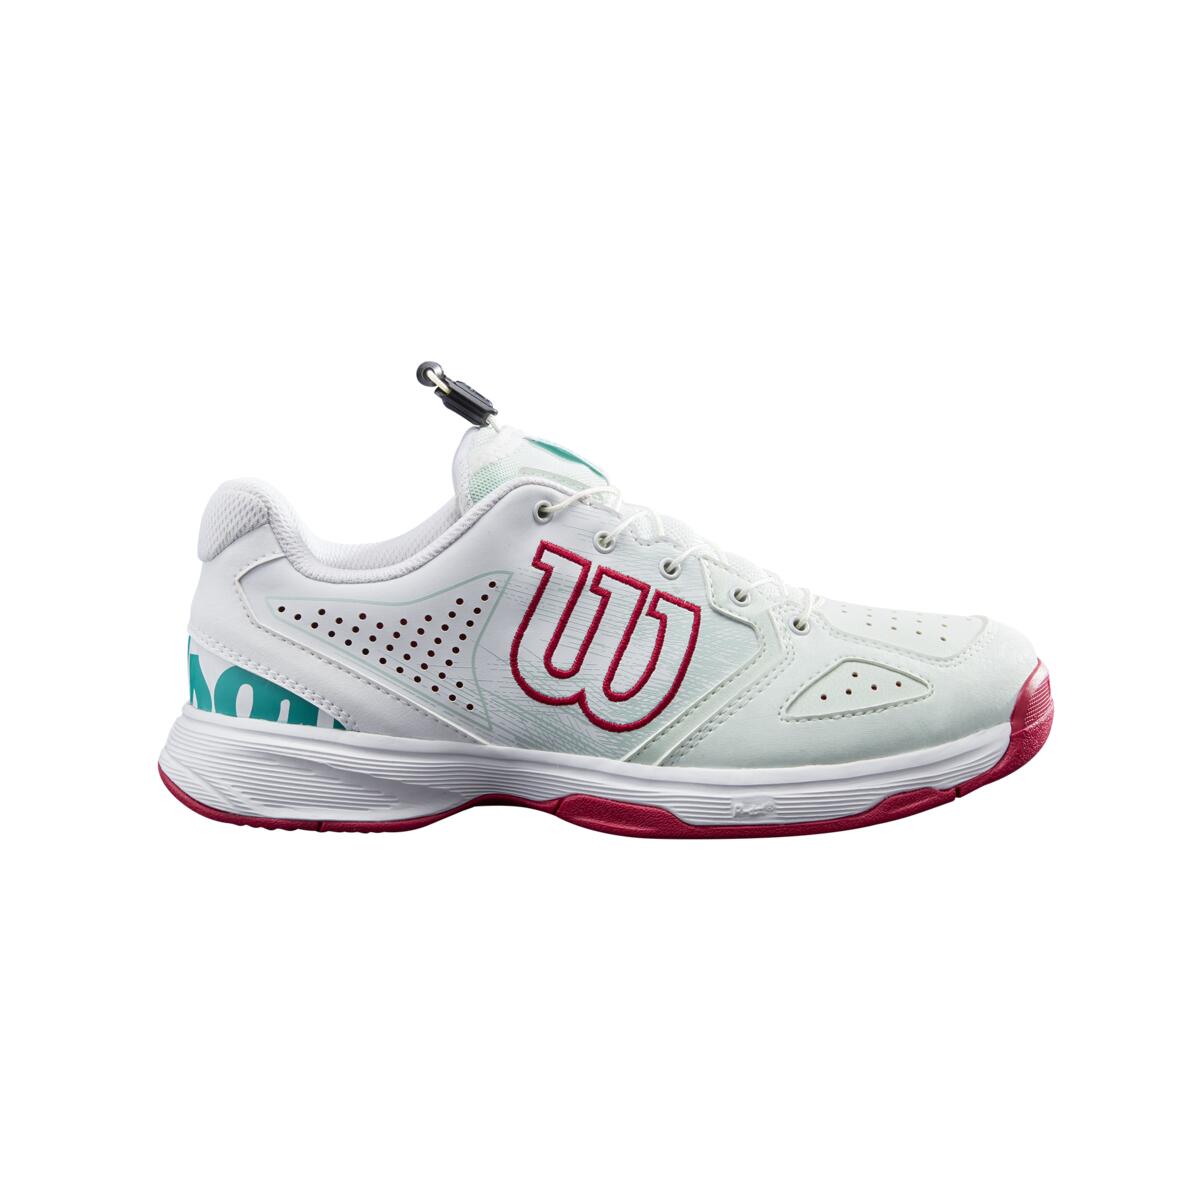 Wilson Kaos Junior QL Tennis Shoes